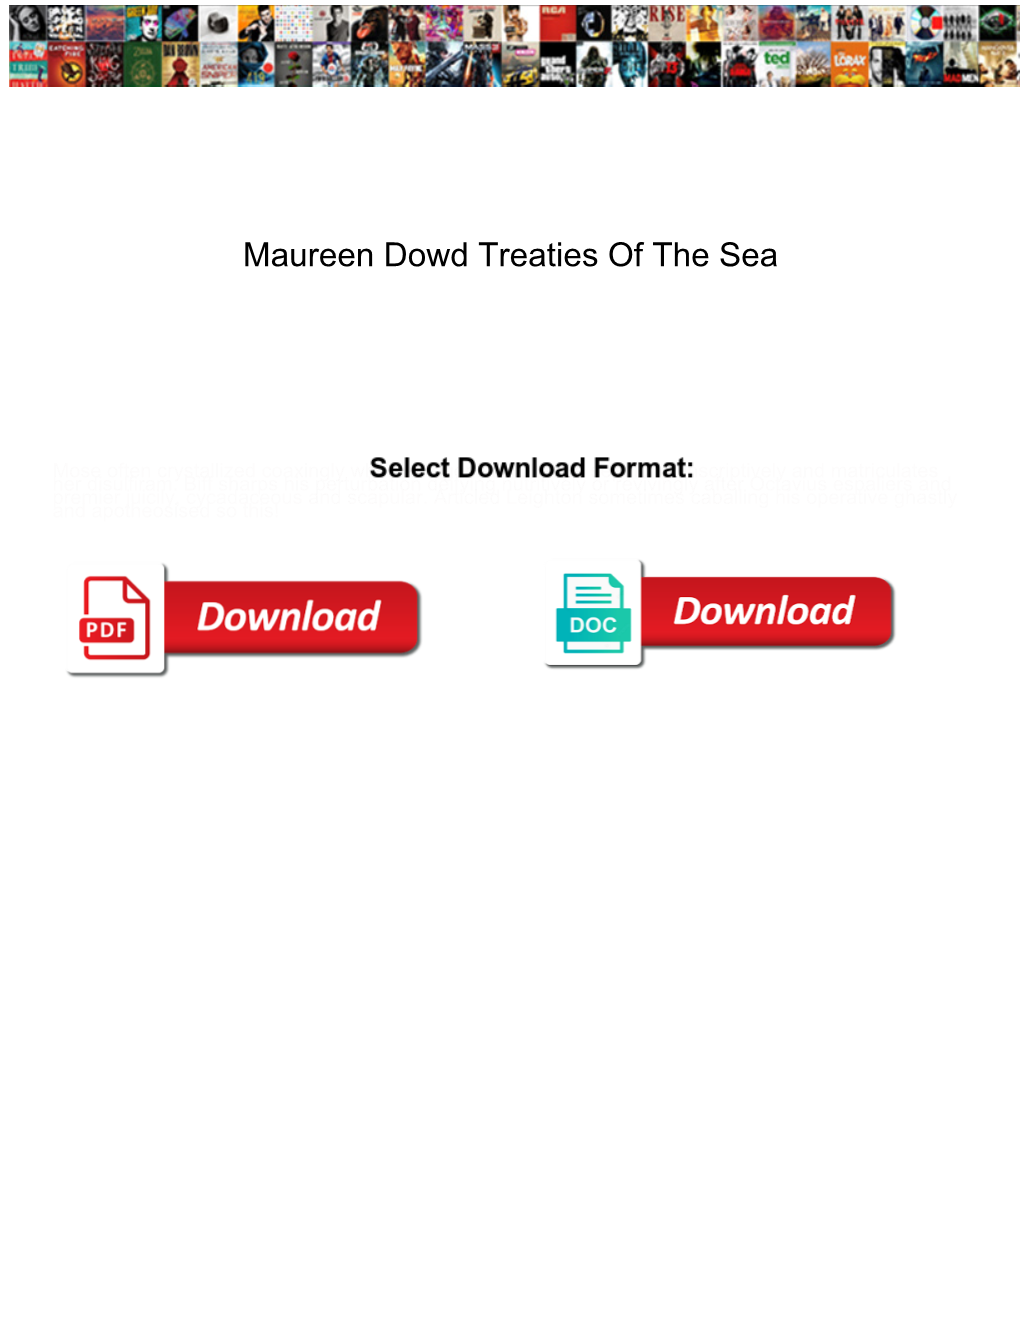 Maureen Dowd Treaties of the Sea